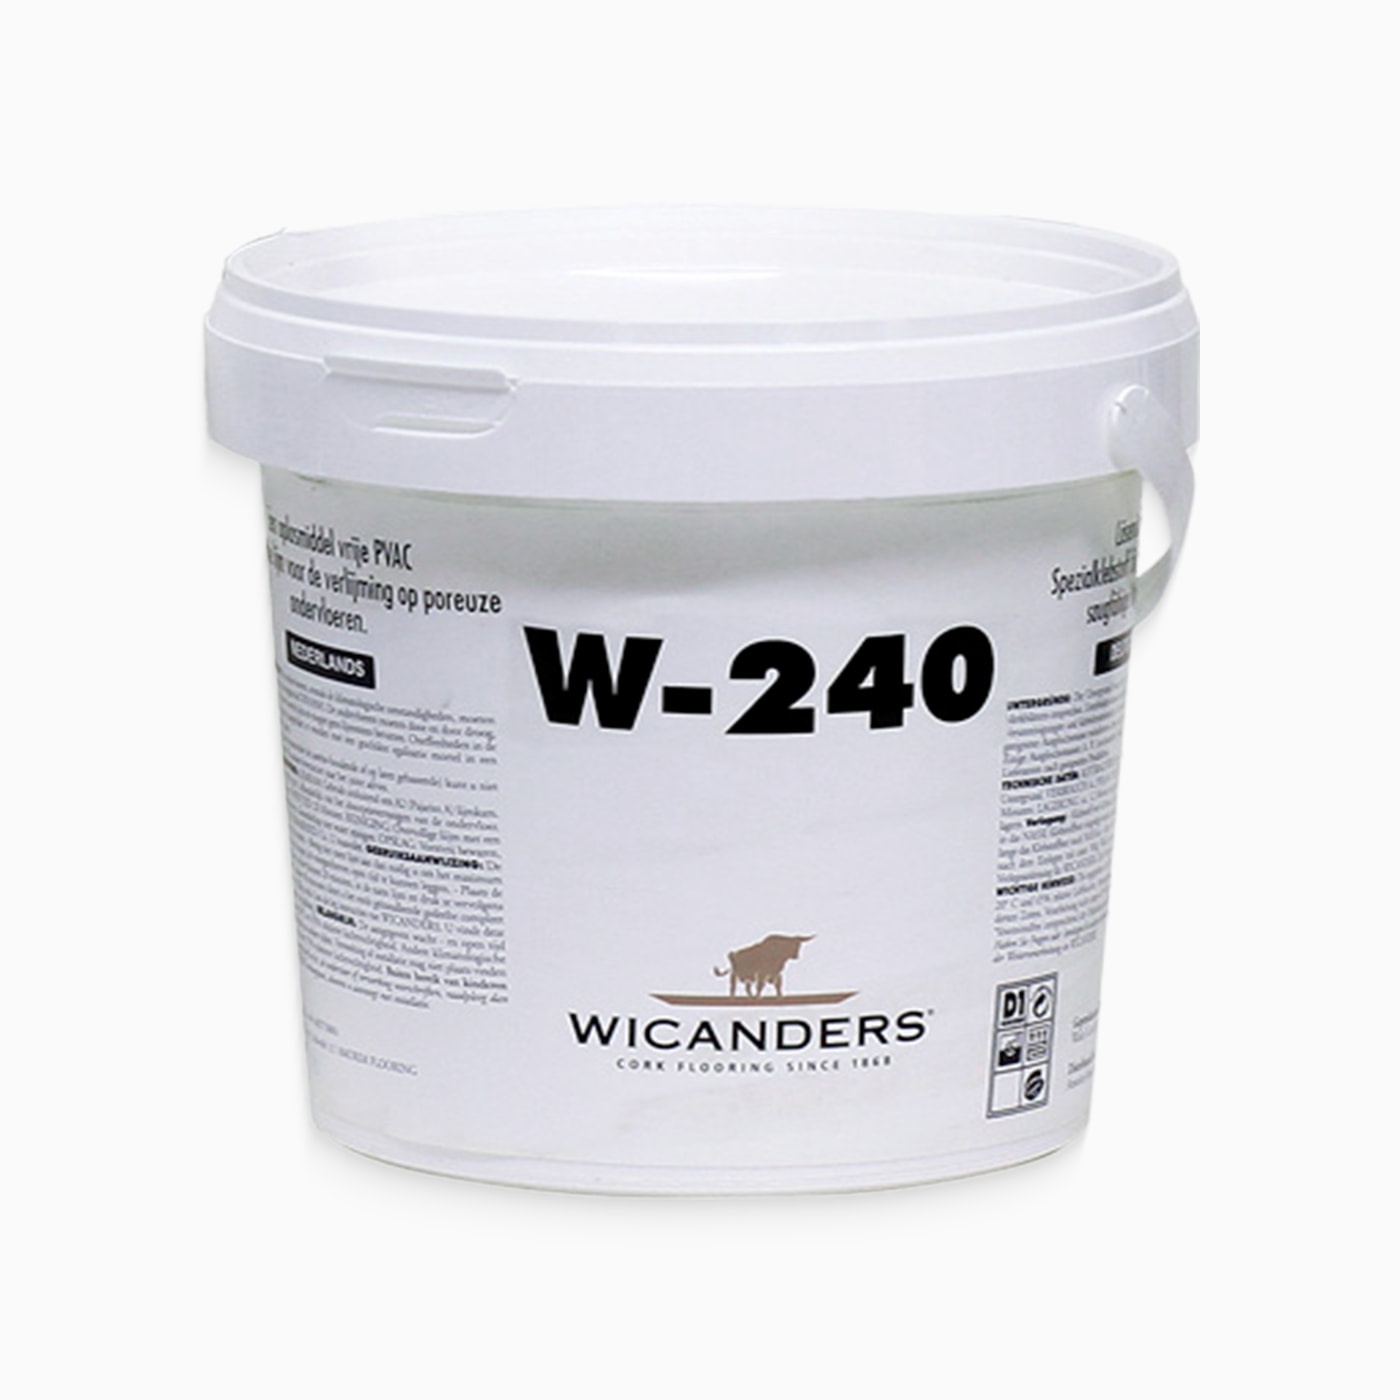 Wicanders Wise Kleber Dispersions-Kontaktklebstoff Latex W-240 1,0kg